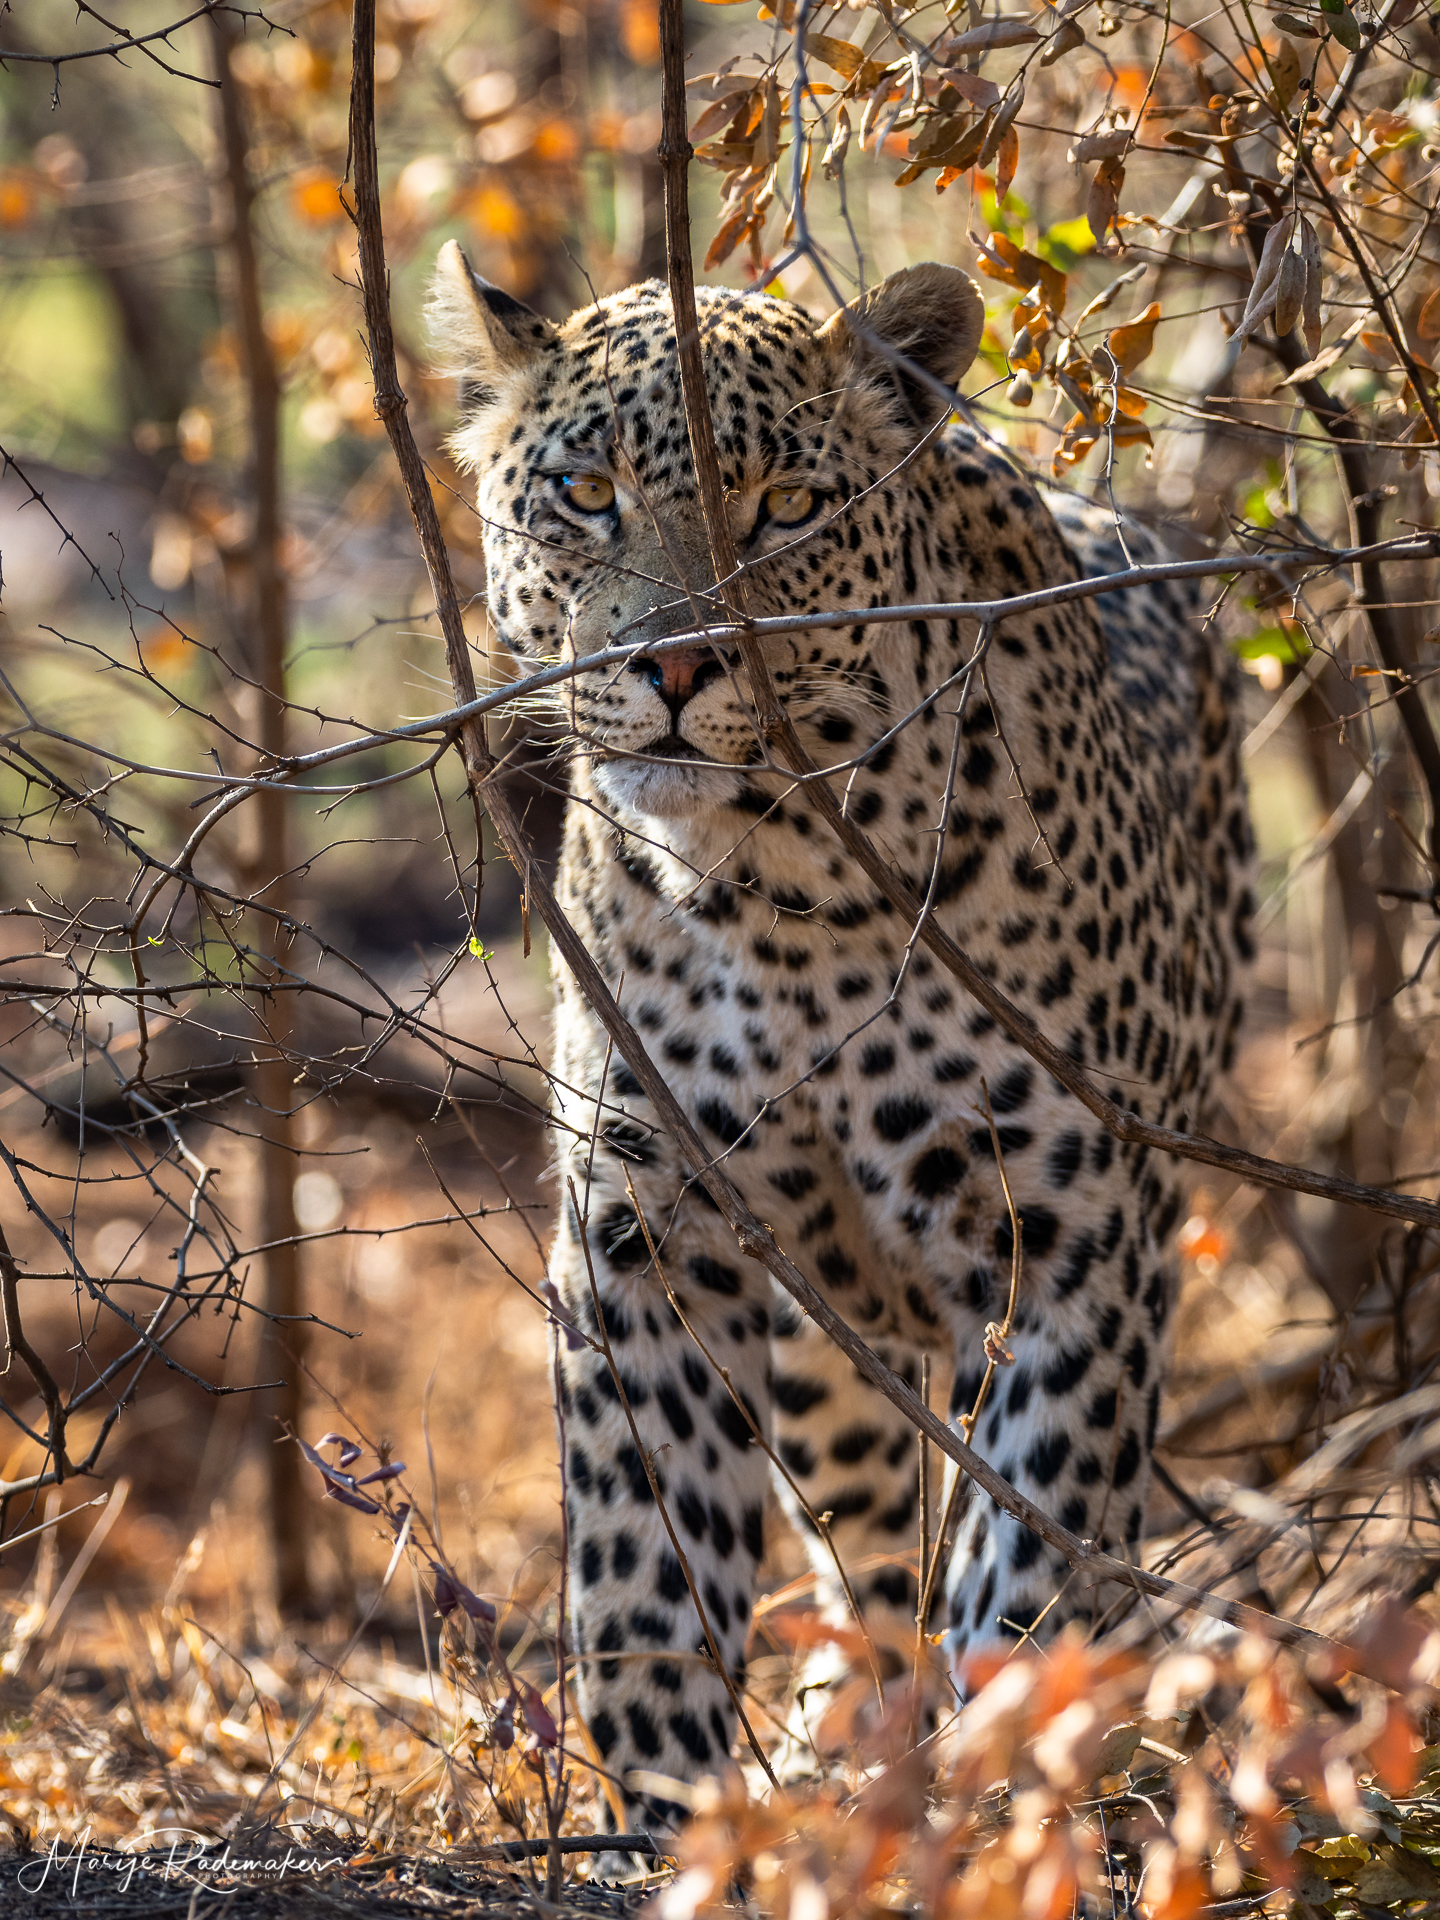 Captured at Pilanesberg on 02 Oct, 2018 by Marije Rademaker